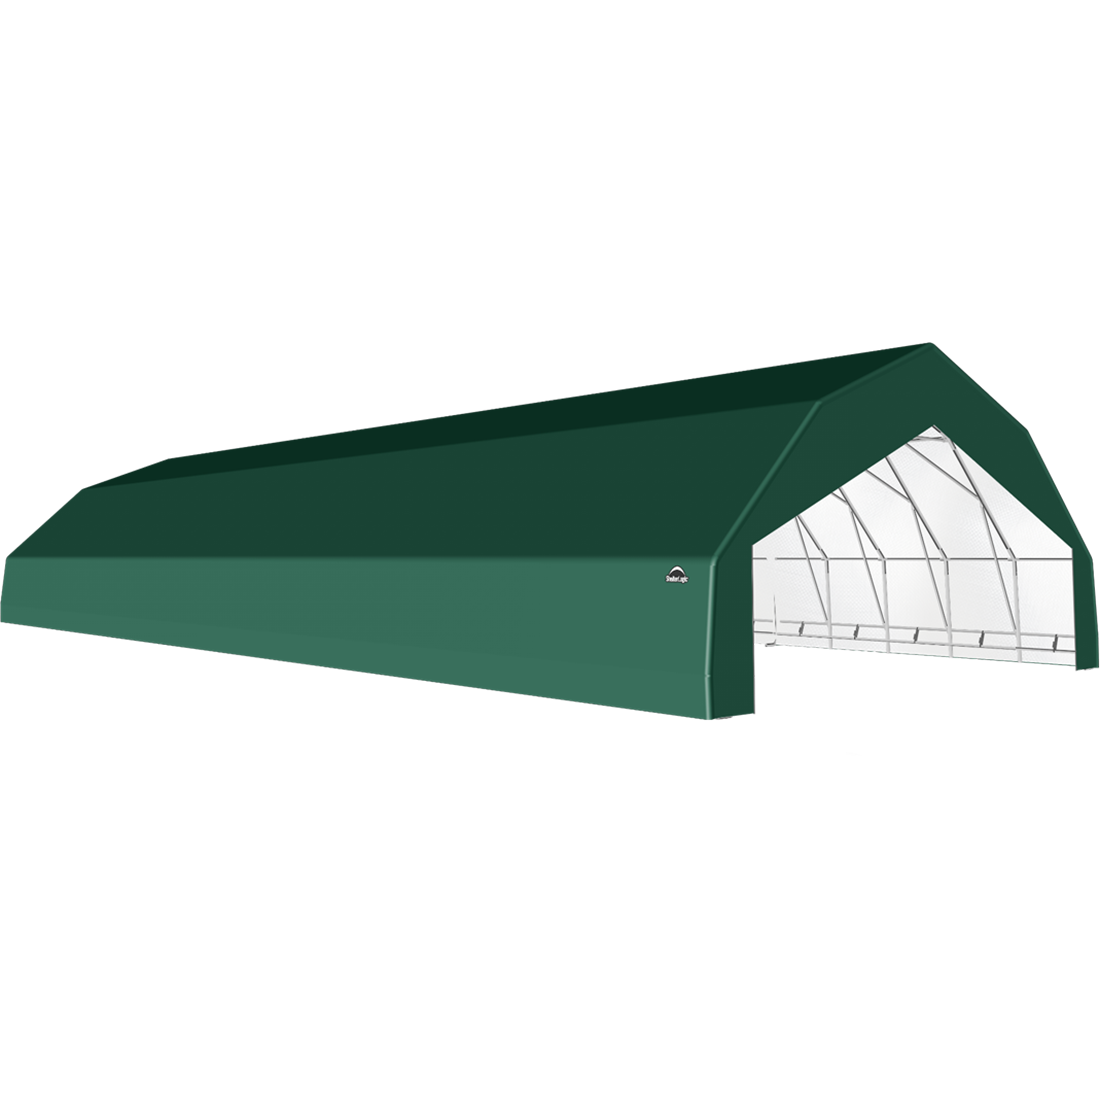 ShelterTech SP Series Barn Shelter, 30 ft. x 88 ft. x 15 ft. Heavy Duty PVC 14.5 oz. Green